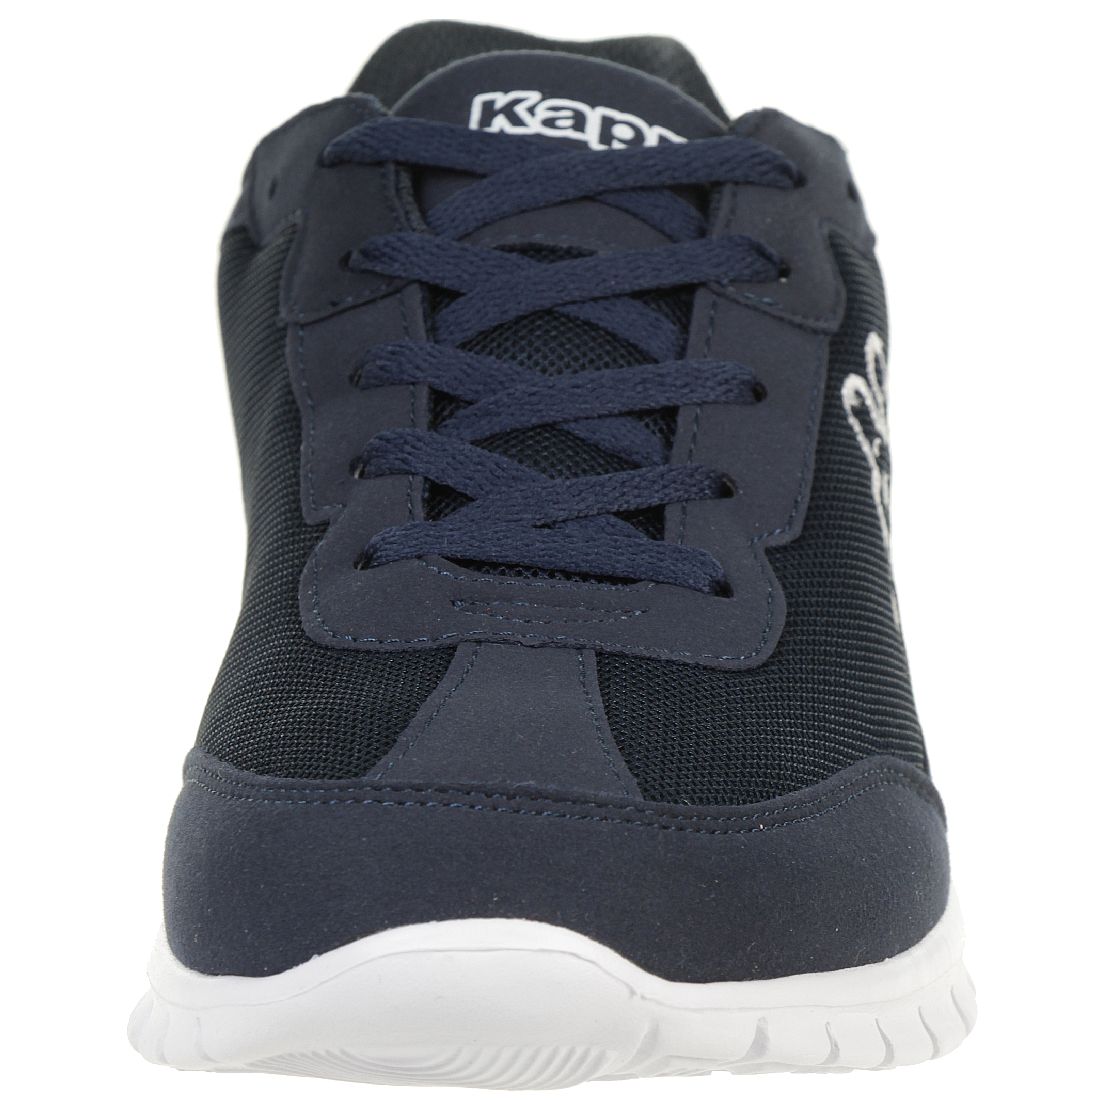 Kappa Rocket Sneaker unisex schwarz navy Turnschuhe Schuhe 242130/6710